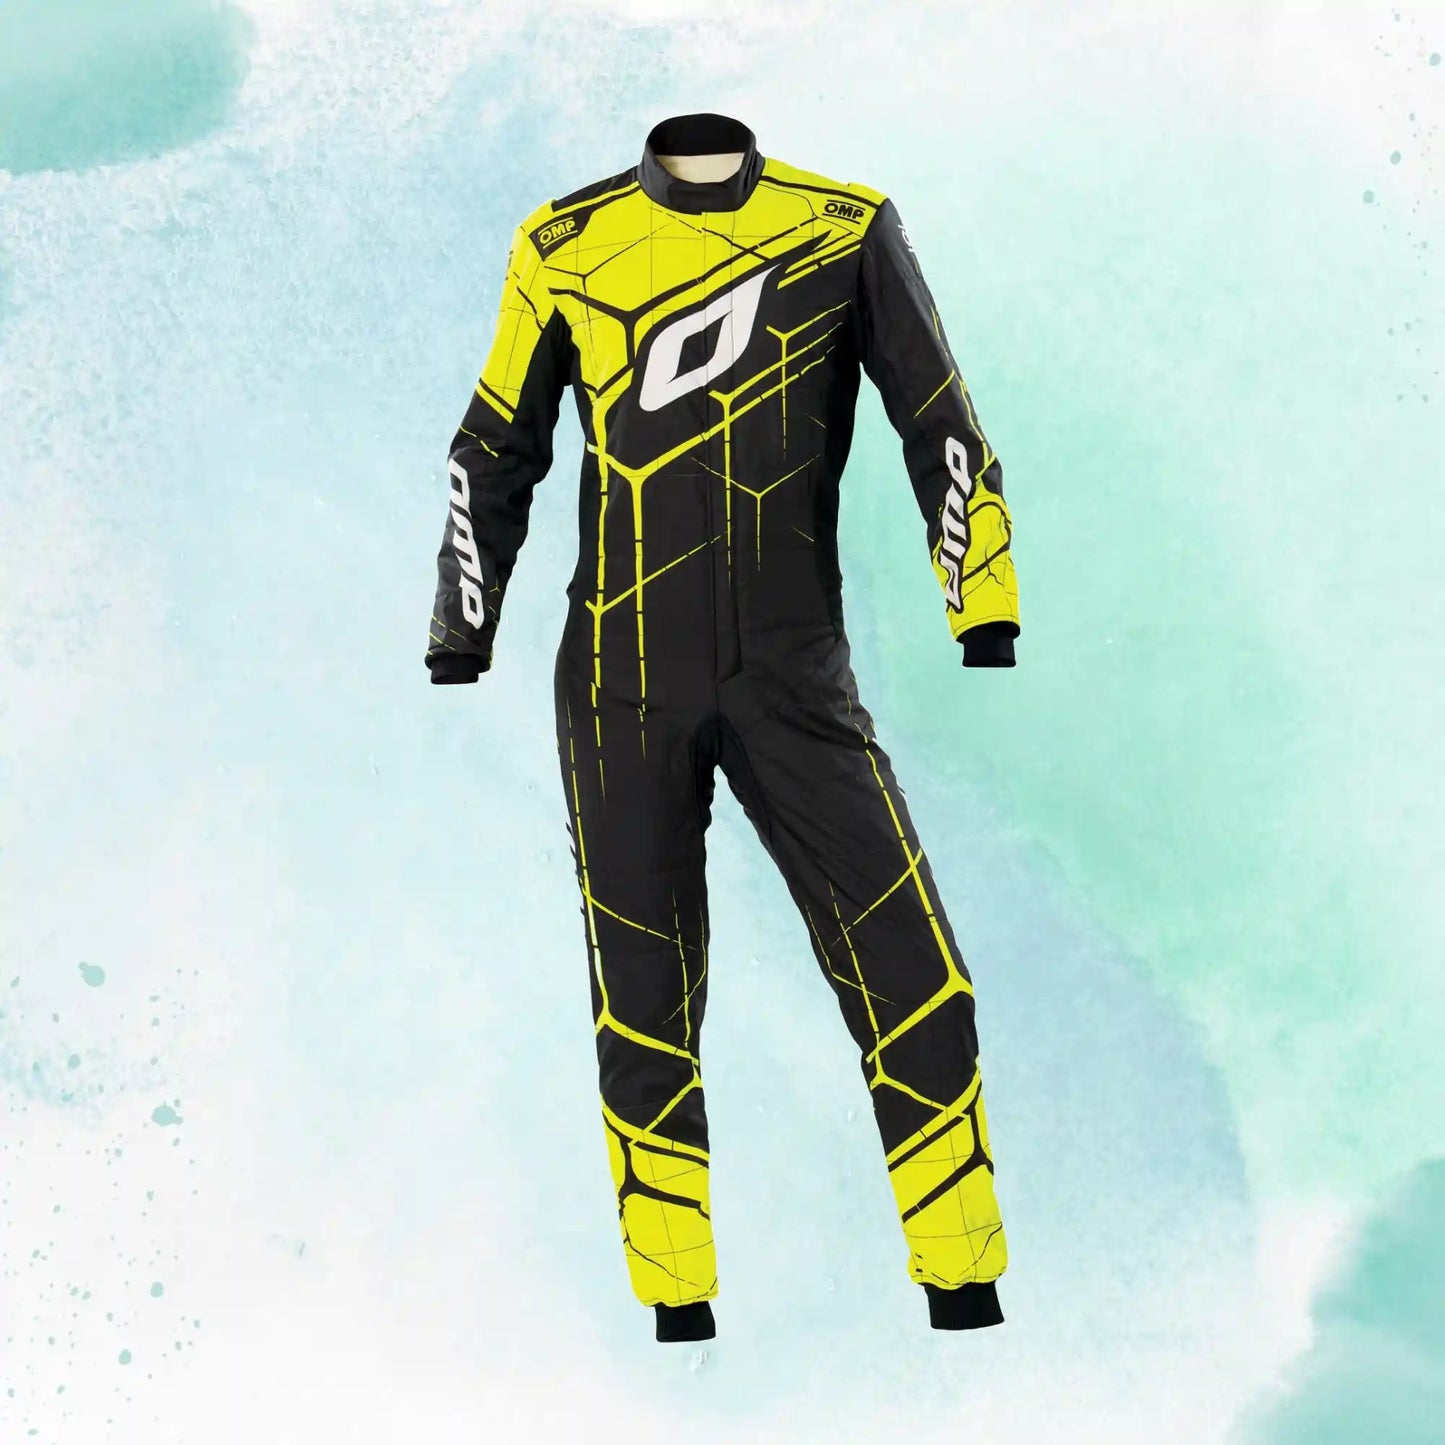 ONE ART Kart Suit - Karting Suit | OMP Racing Sublimation Printed Suit